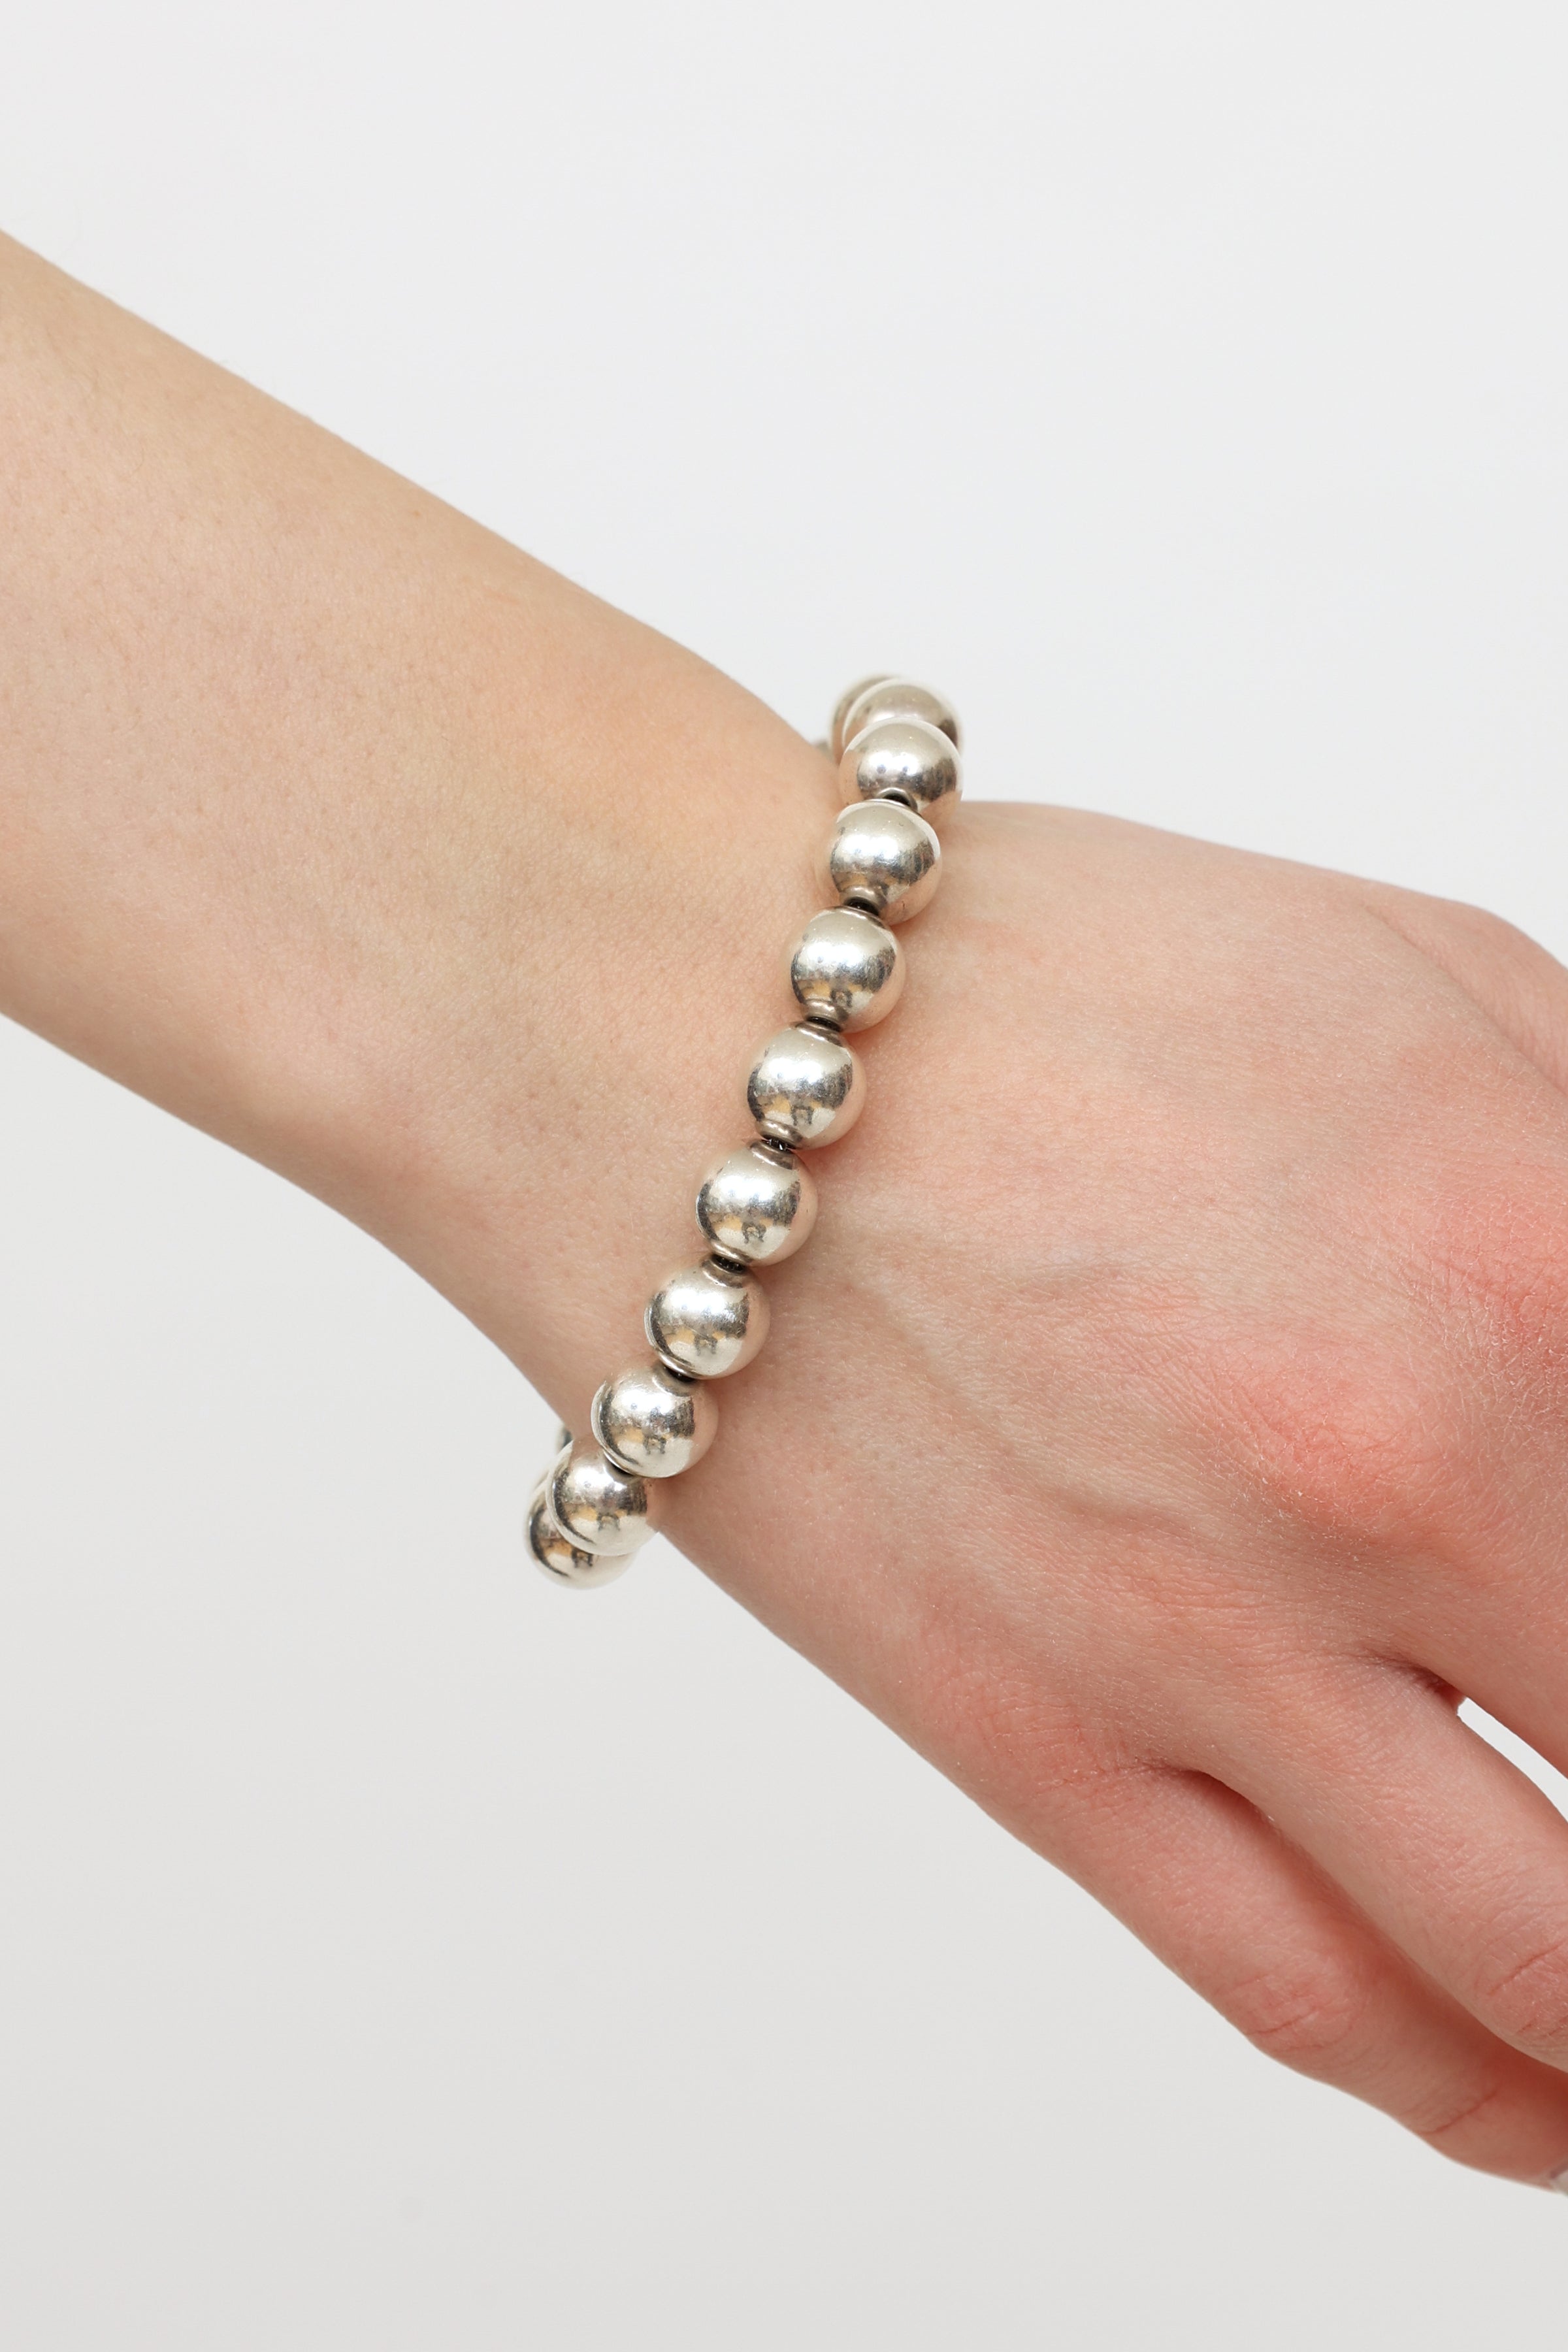 Sterling Silver Mom Heart Tag Bead Bracelet | Tiffany & Co.